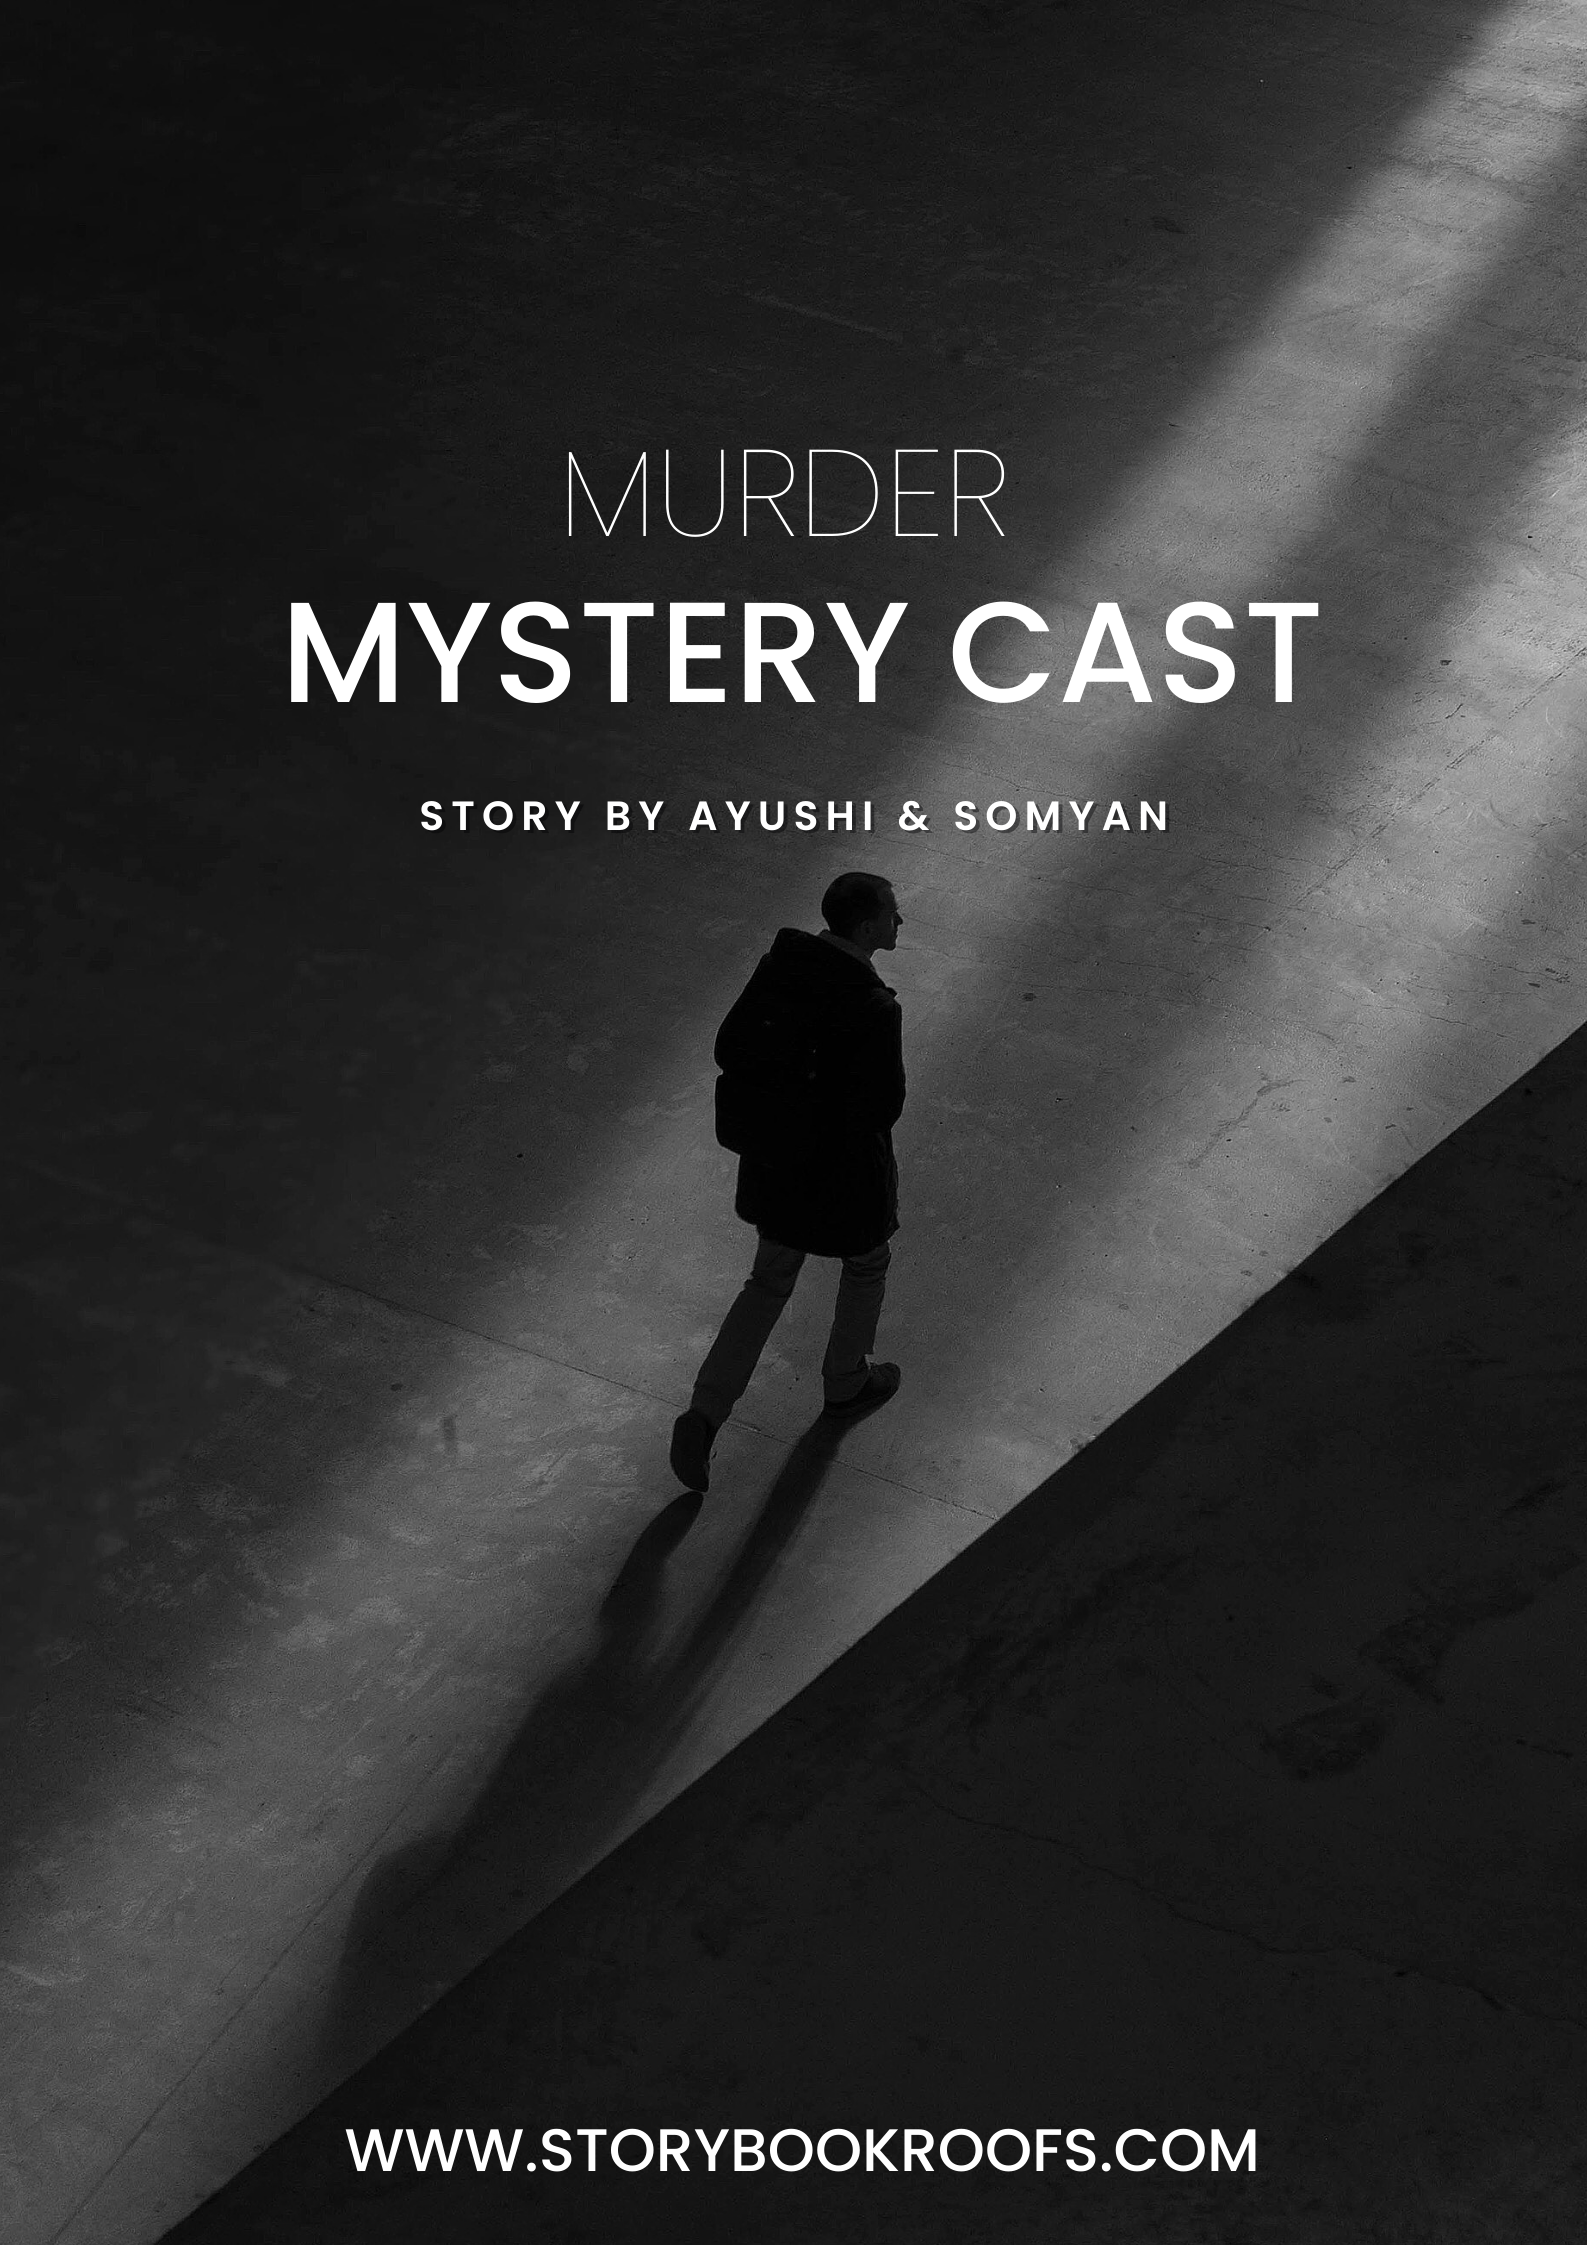 Murder mystery cast